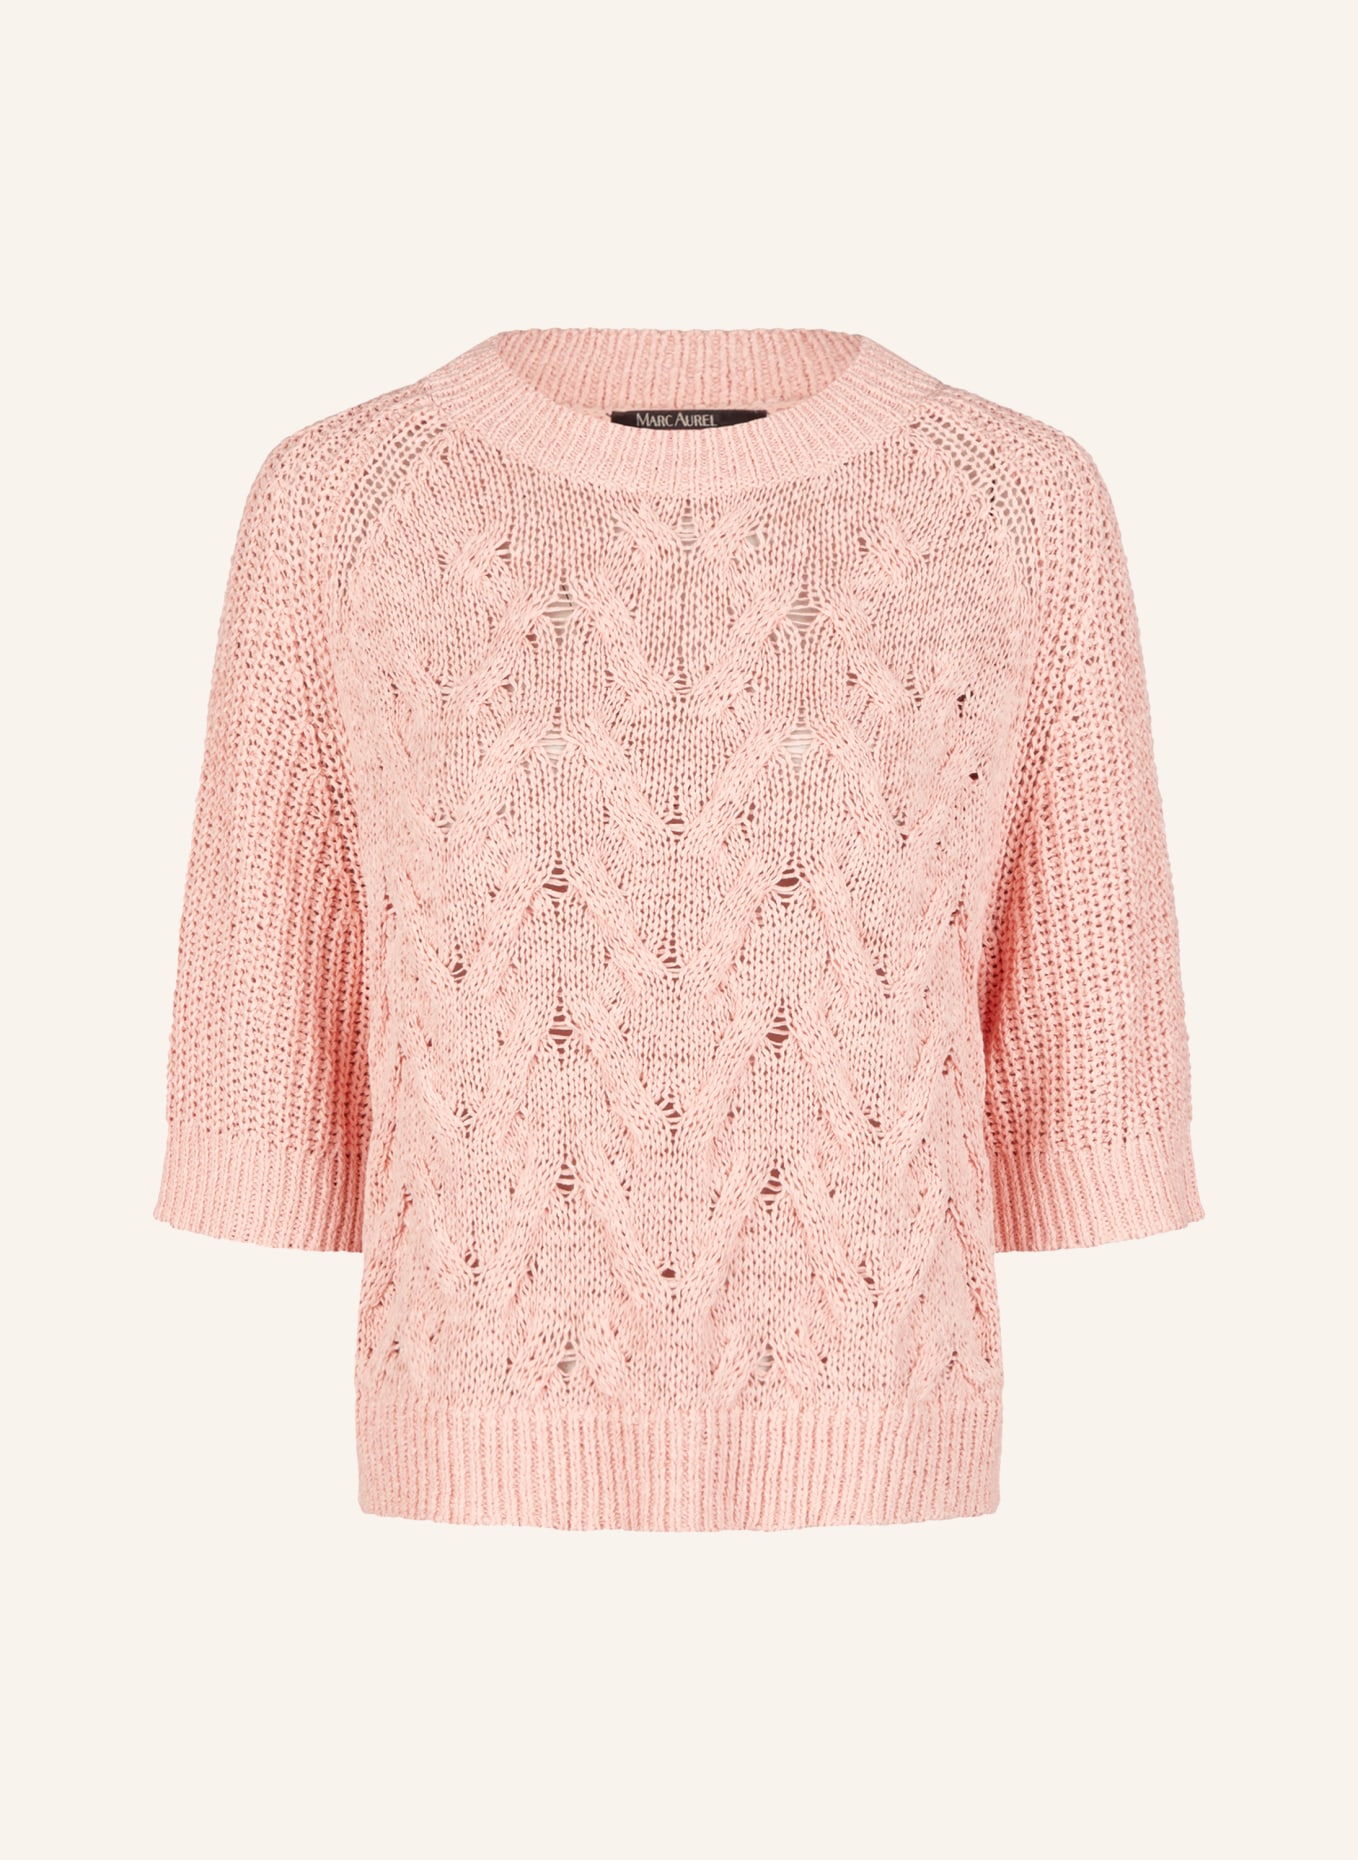 MARC AUREL Pullover, Farbe: ROSÉ (Bild 1)